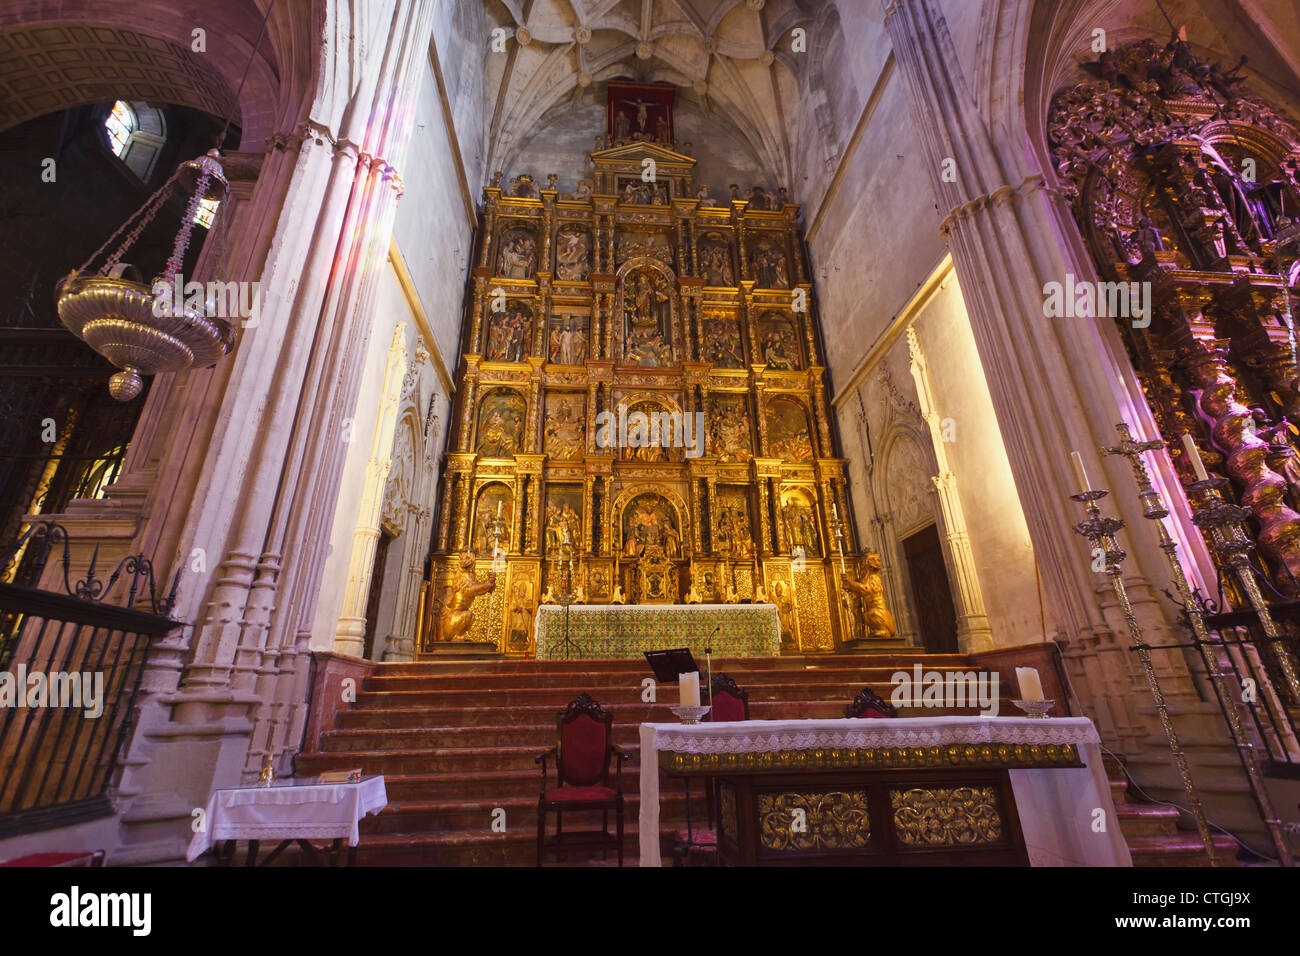 Carmona, Seville Province, Spain. Interior of Prioral de Santa Maria. Priory of Santa Maria. Stock Photo